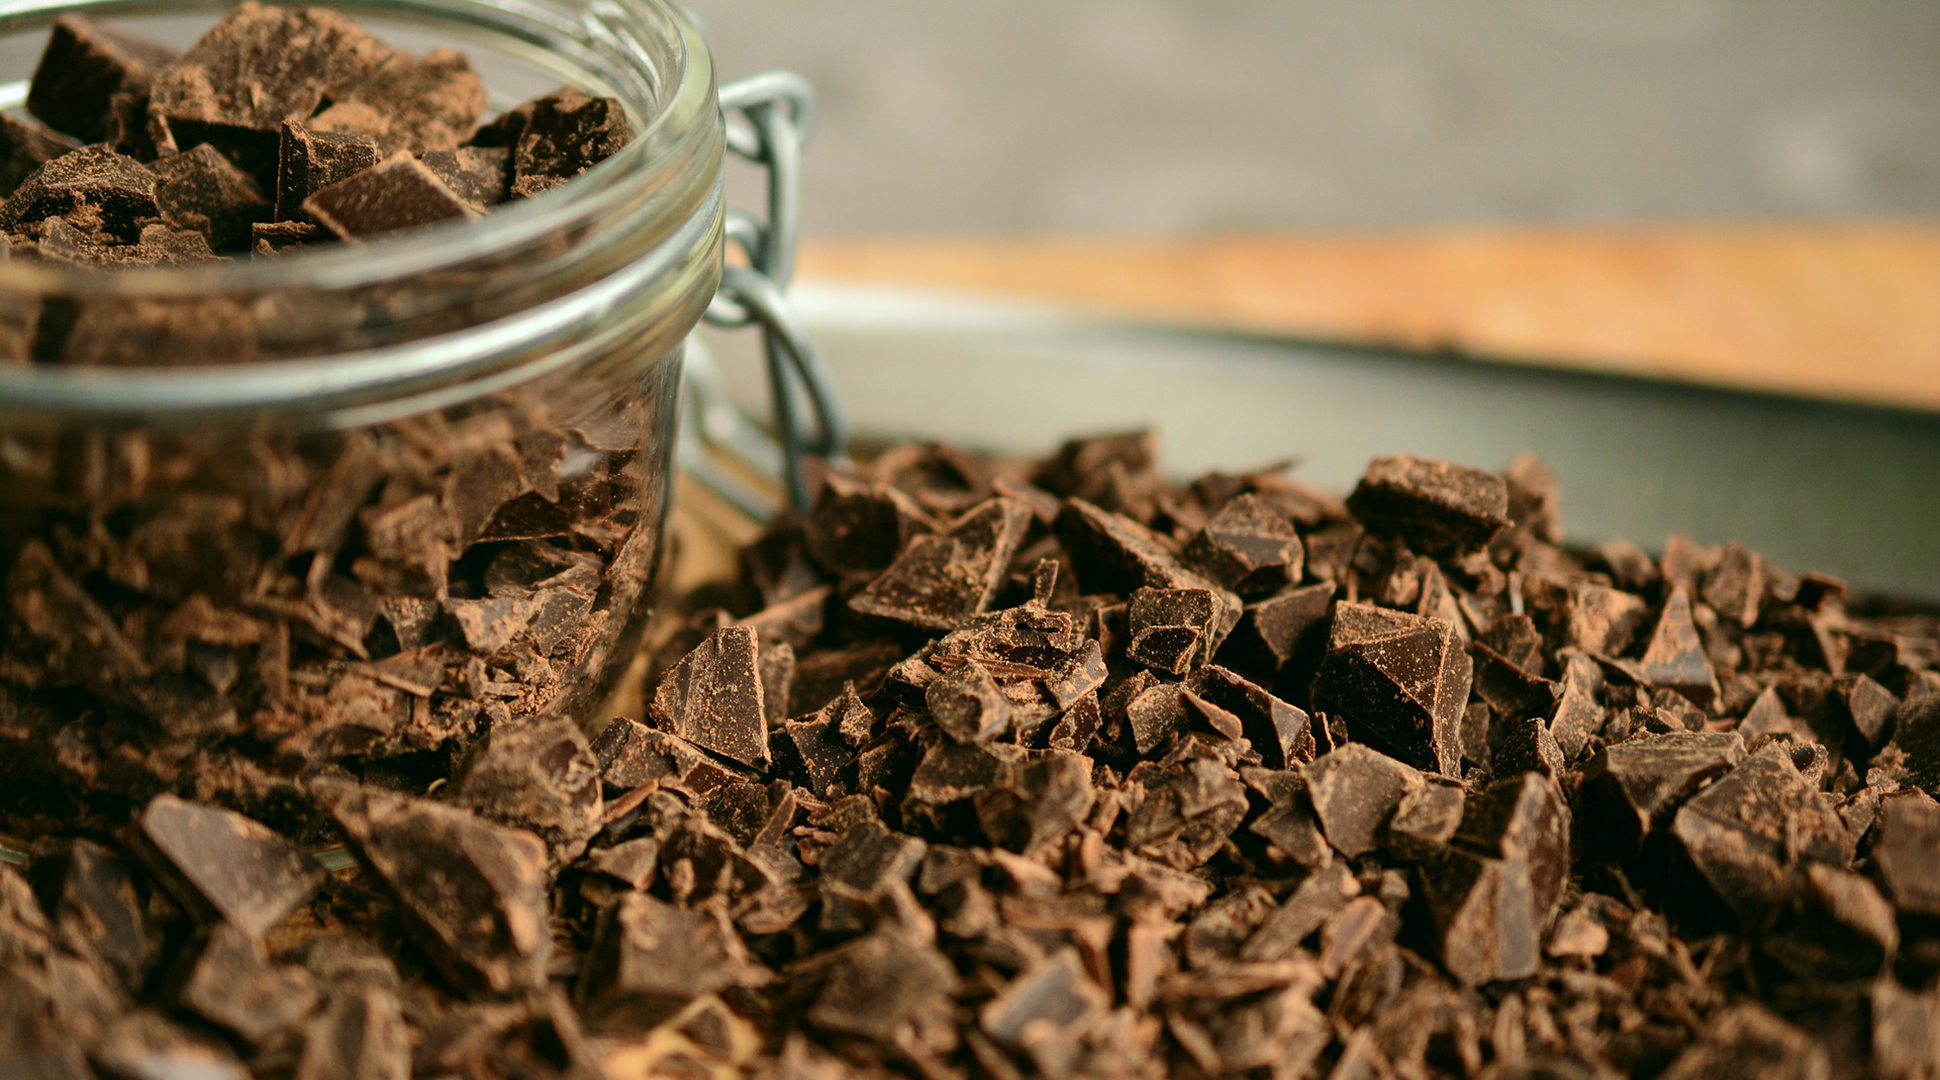 The health benefits of chocolate